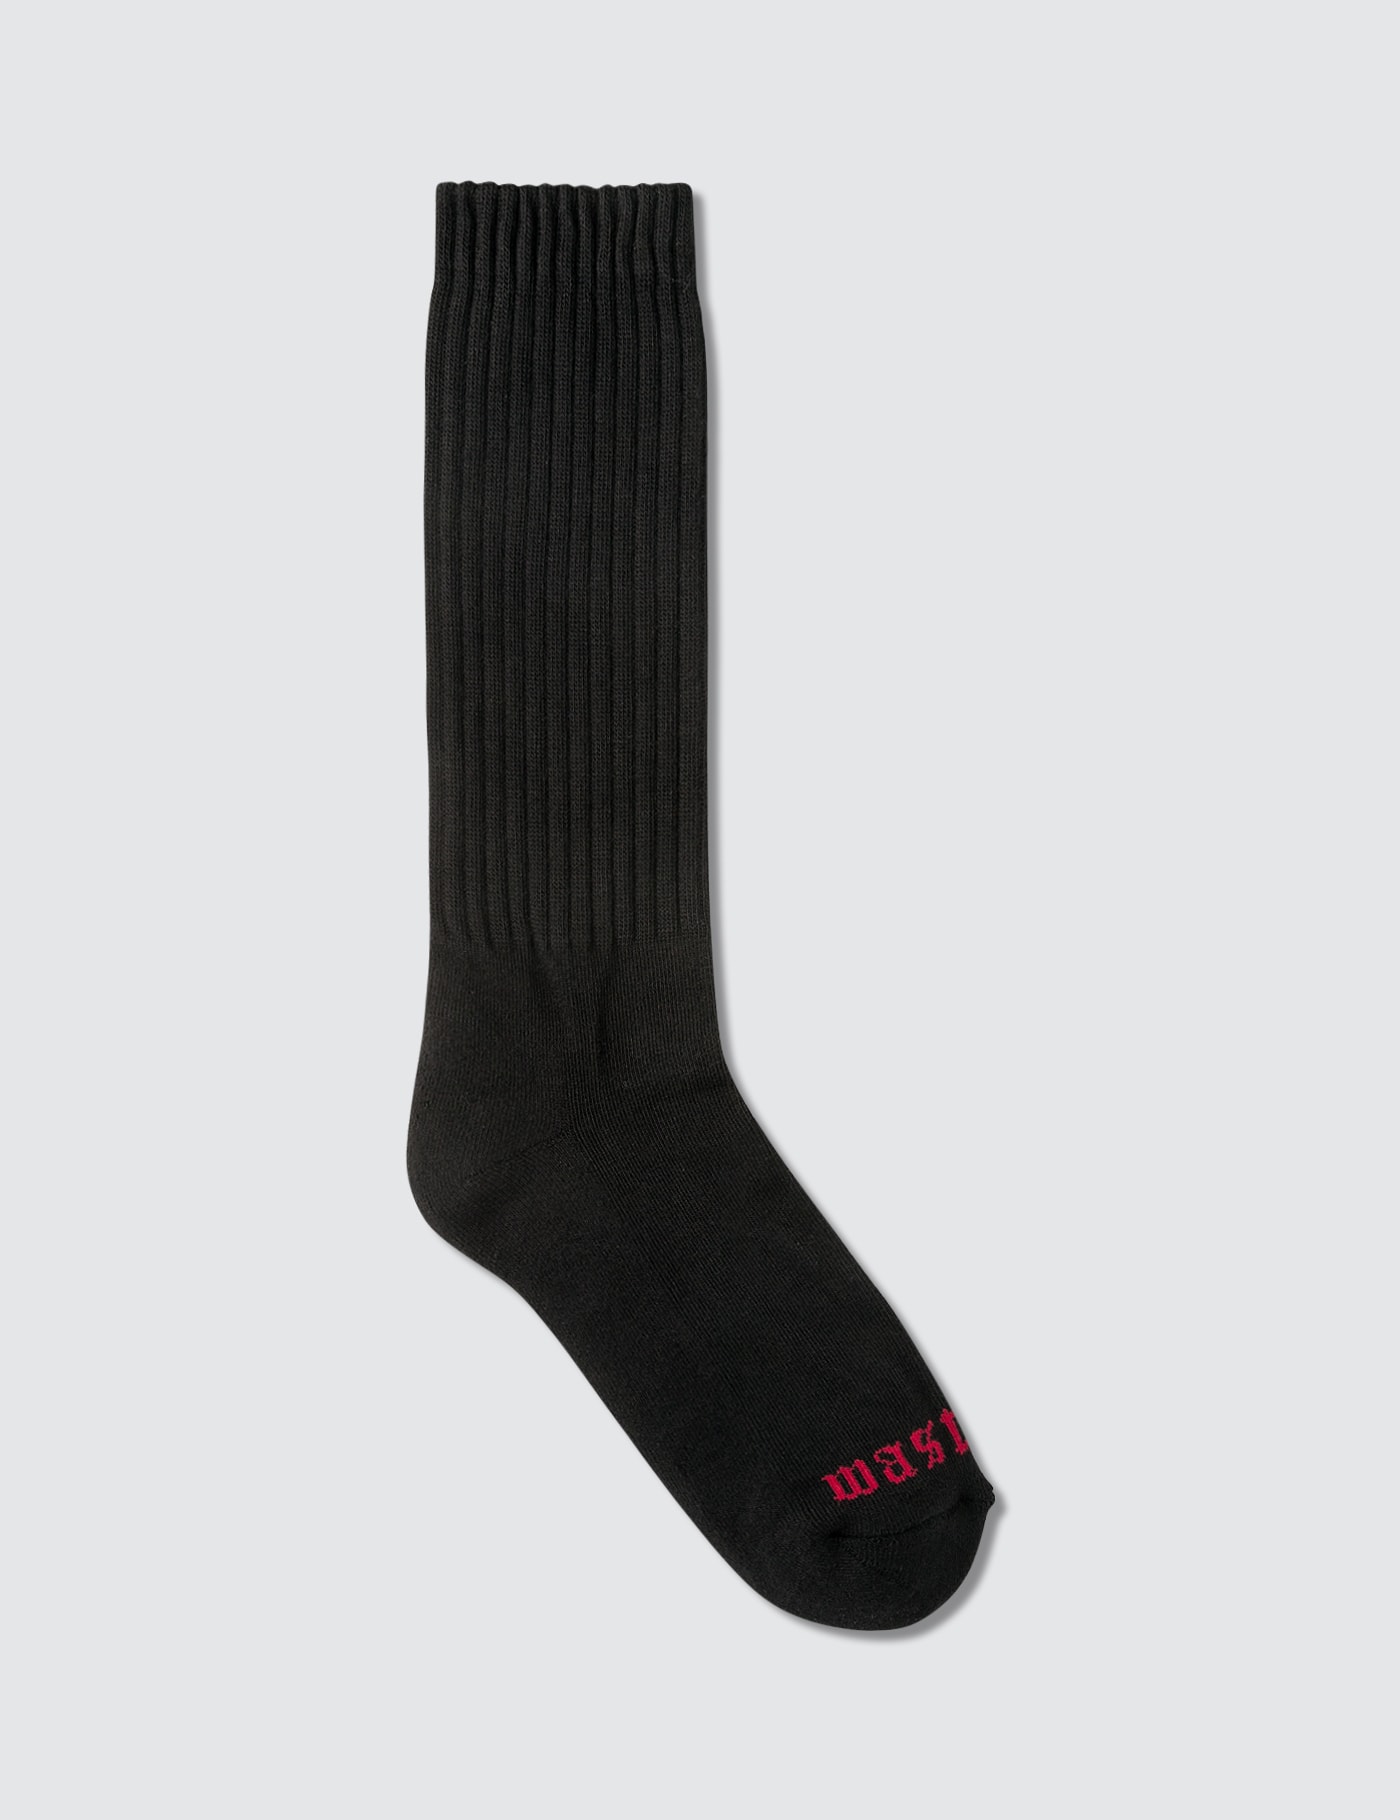 Wasted Paris - Fearless Socks | HBX